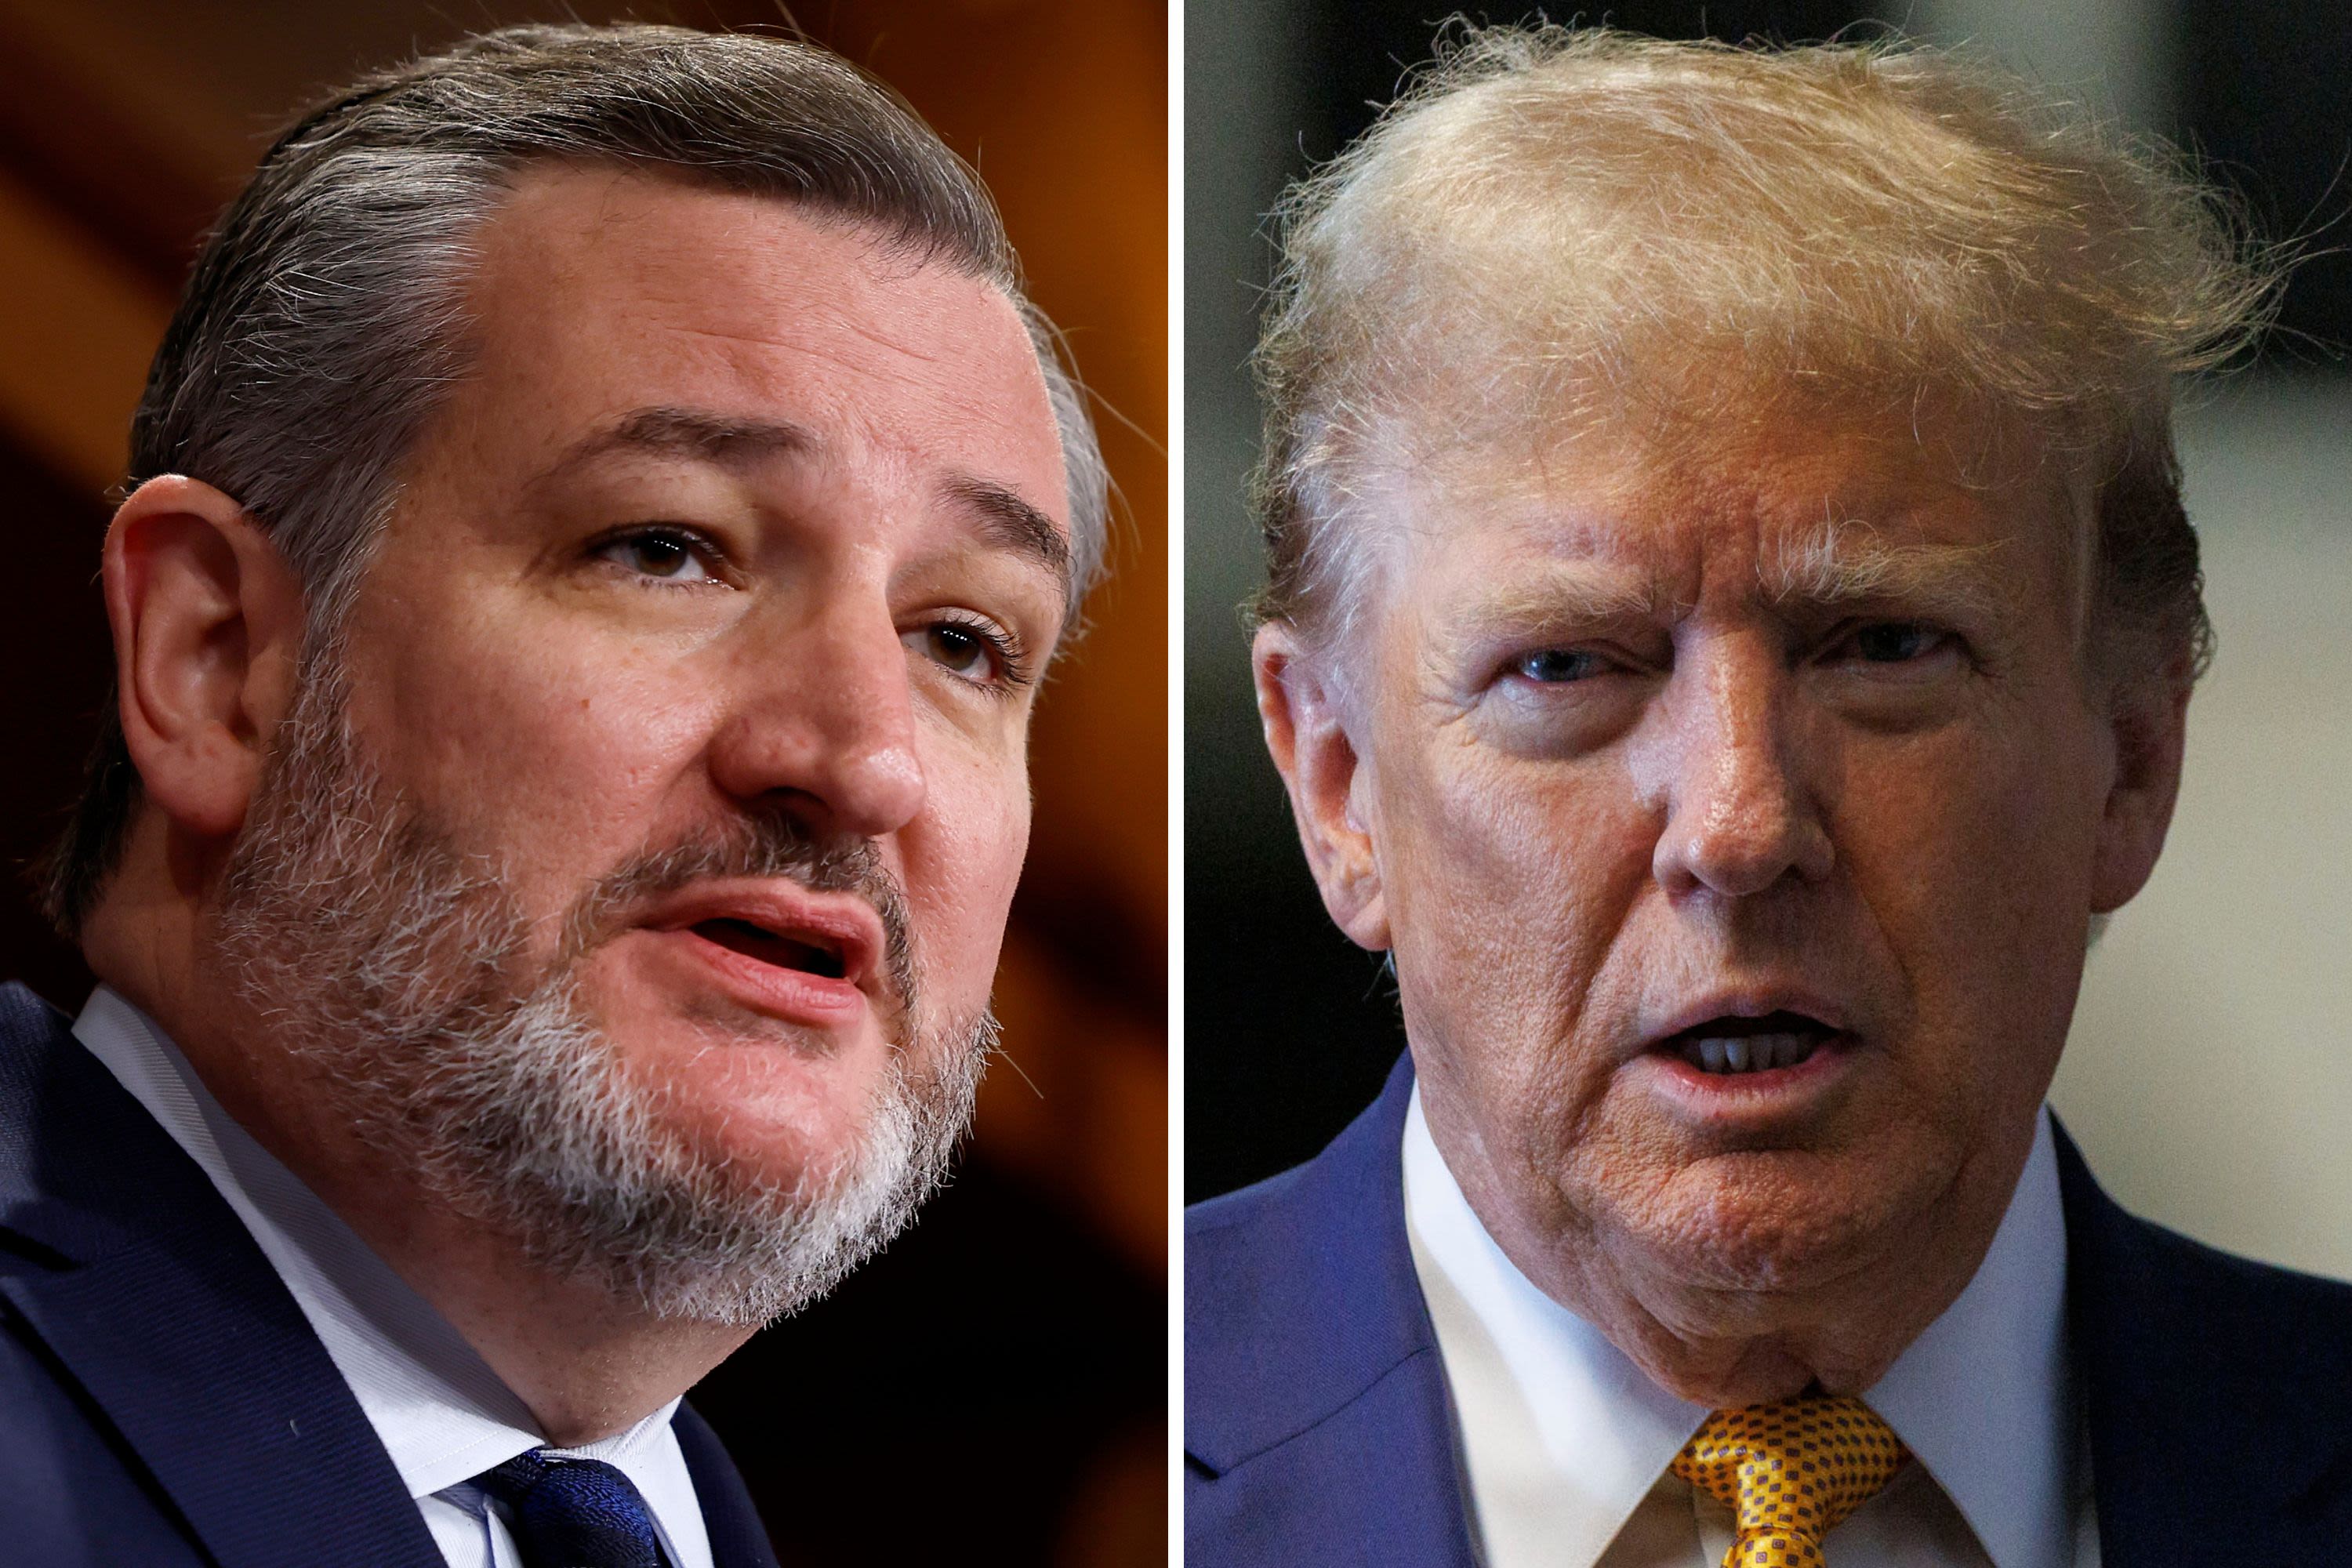 Ted Cruz's defense of Donald Trump raises eyebrows